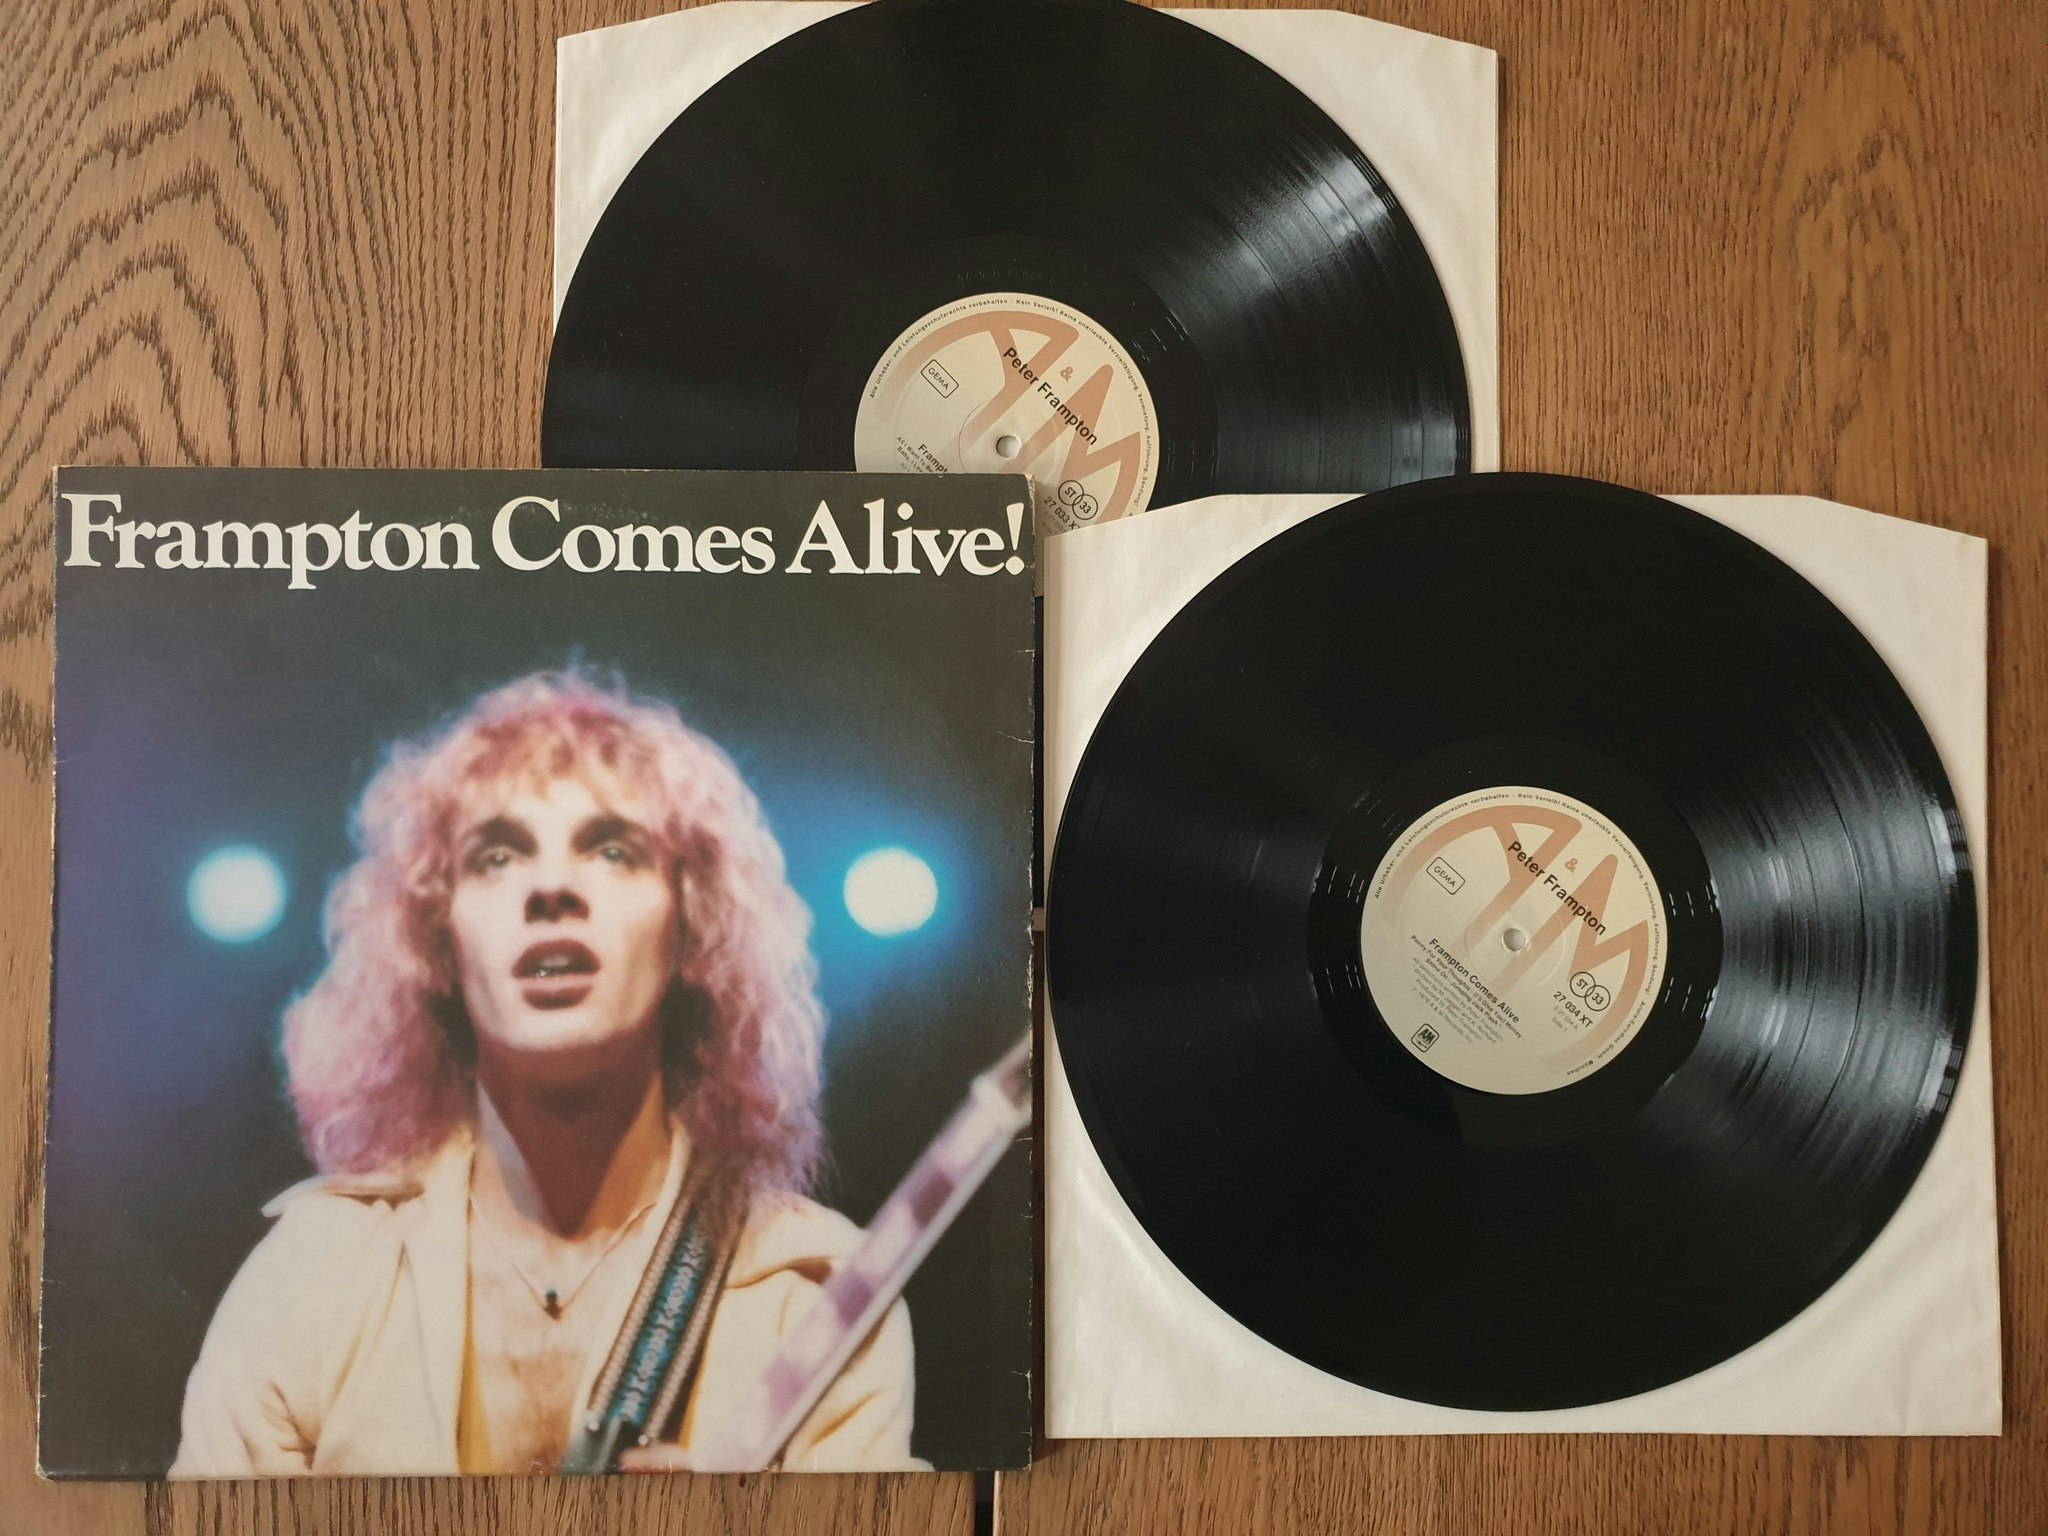 Peter Frampton, Frampton comes alive. Vinyl 2LP